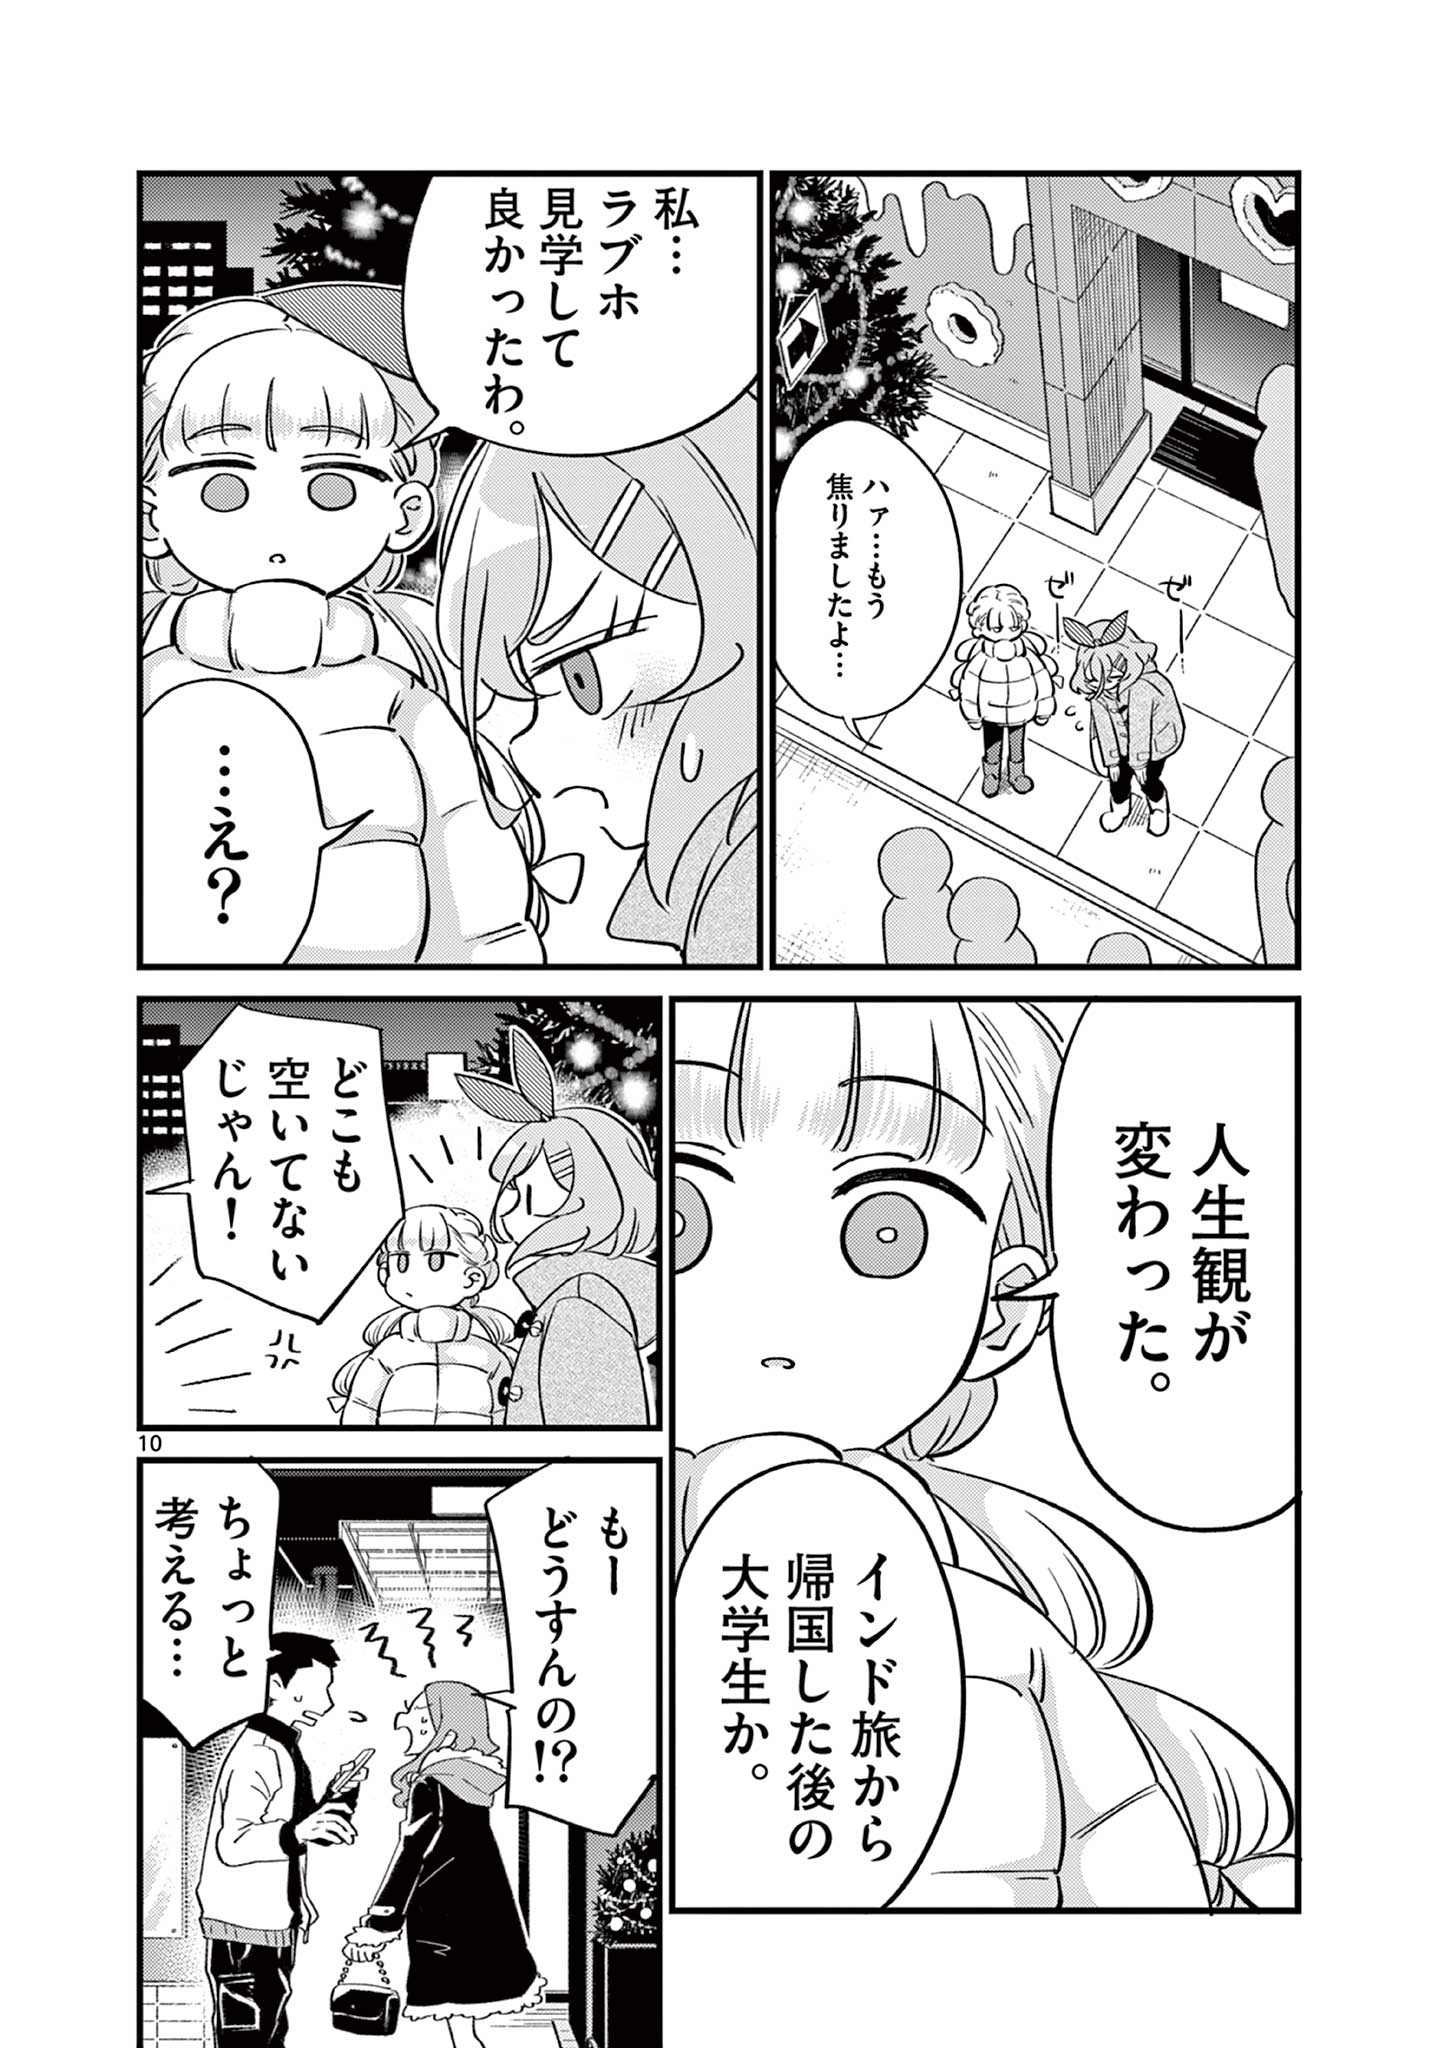 Ranka-chan wa Bitch ni Naritai - Chapter 16 - Page 10